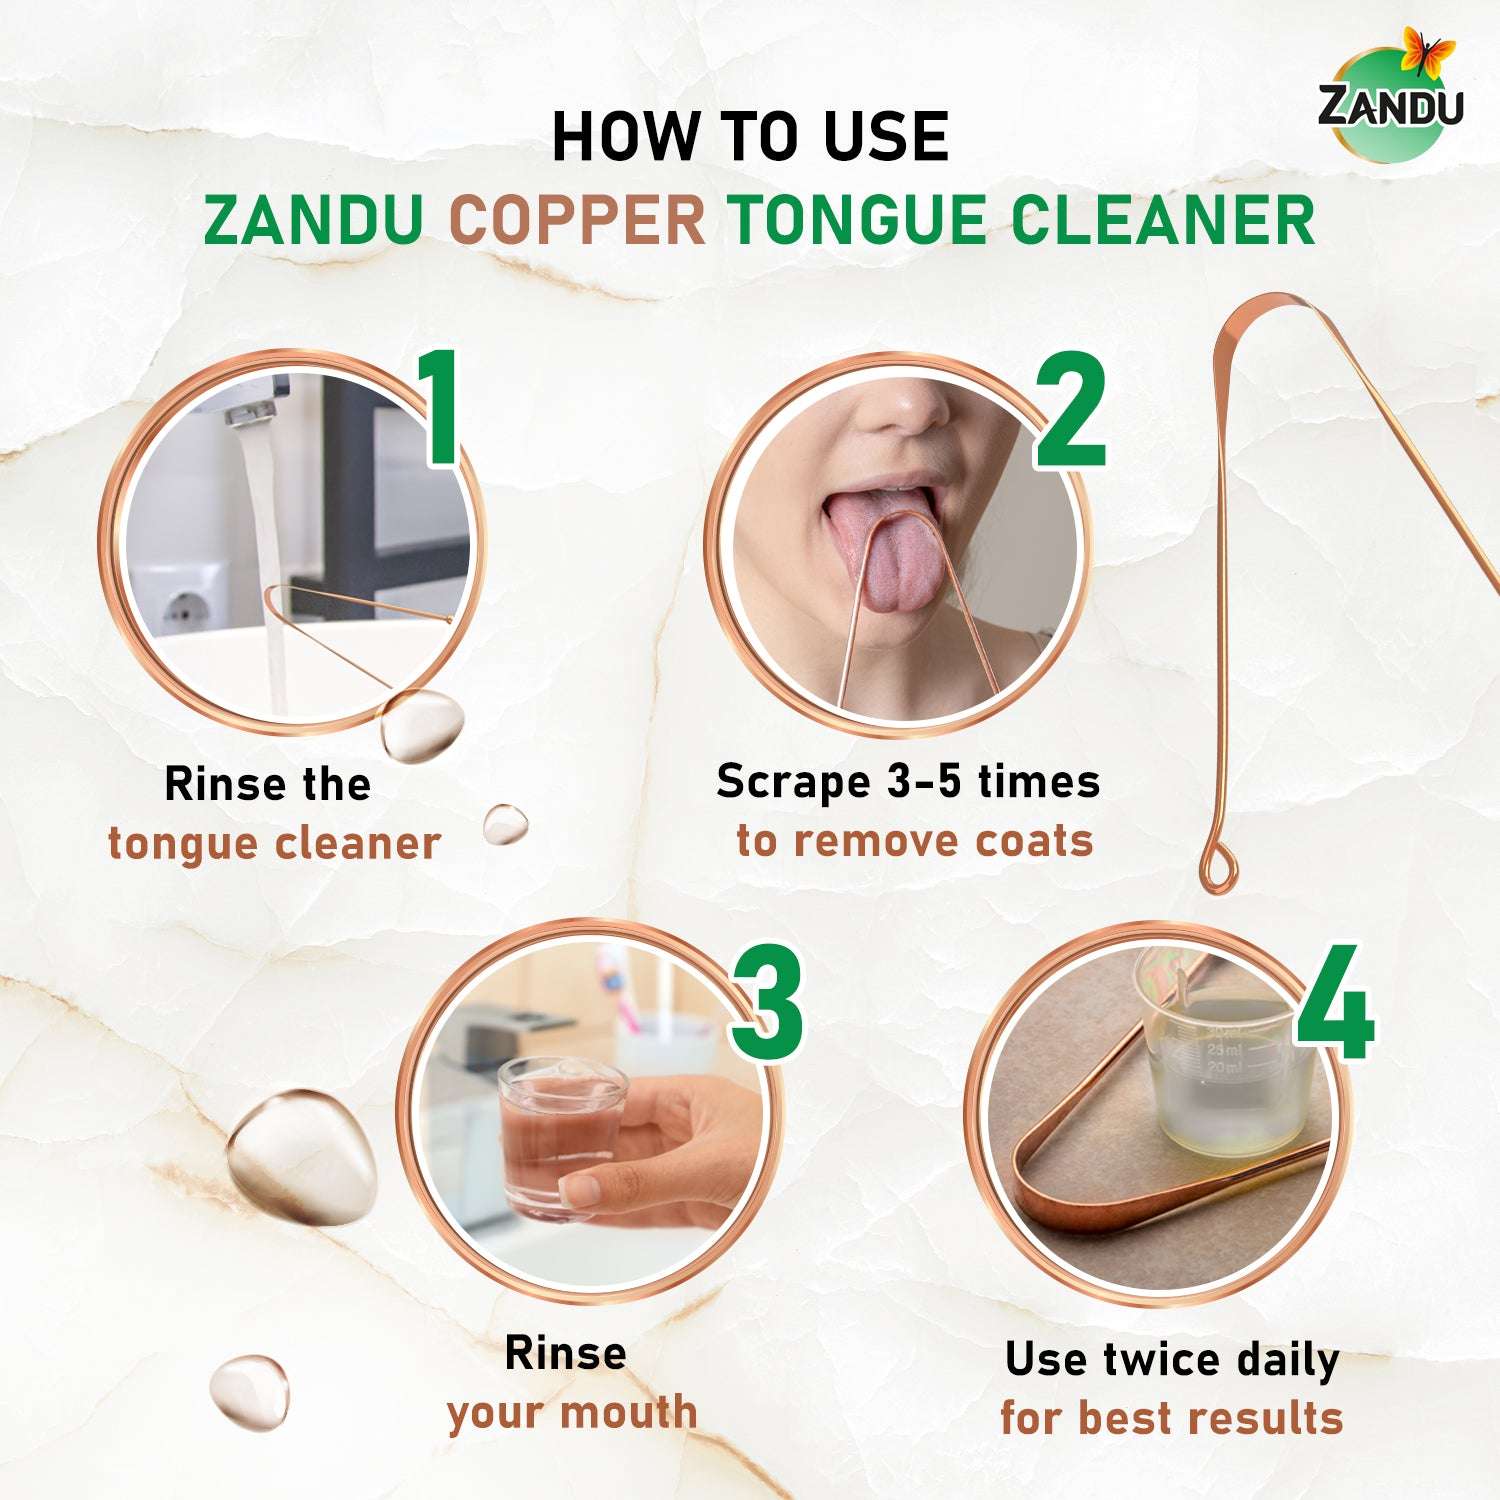 Zandu Copper Tongue Cleaner for Fresh Breath, Improved Taste Sense & Bacteria Removal